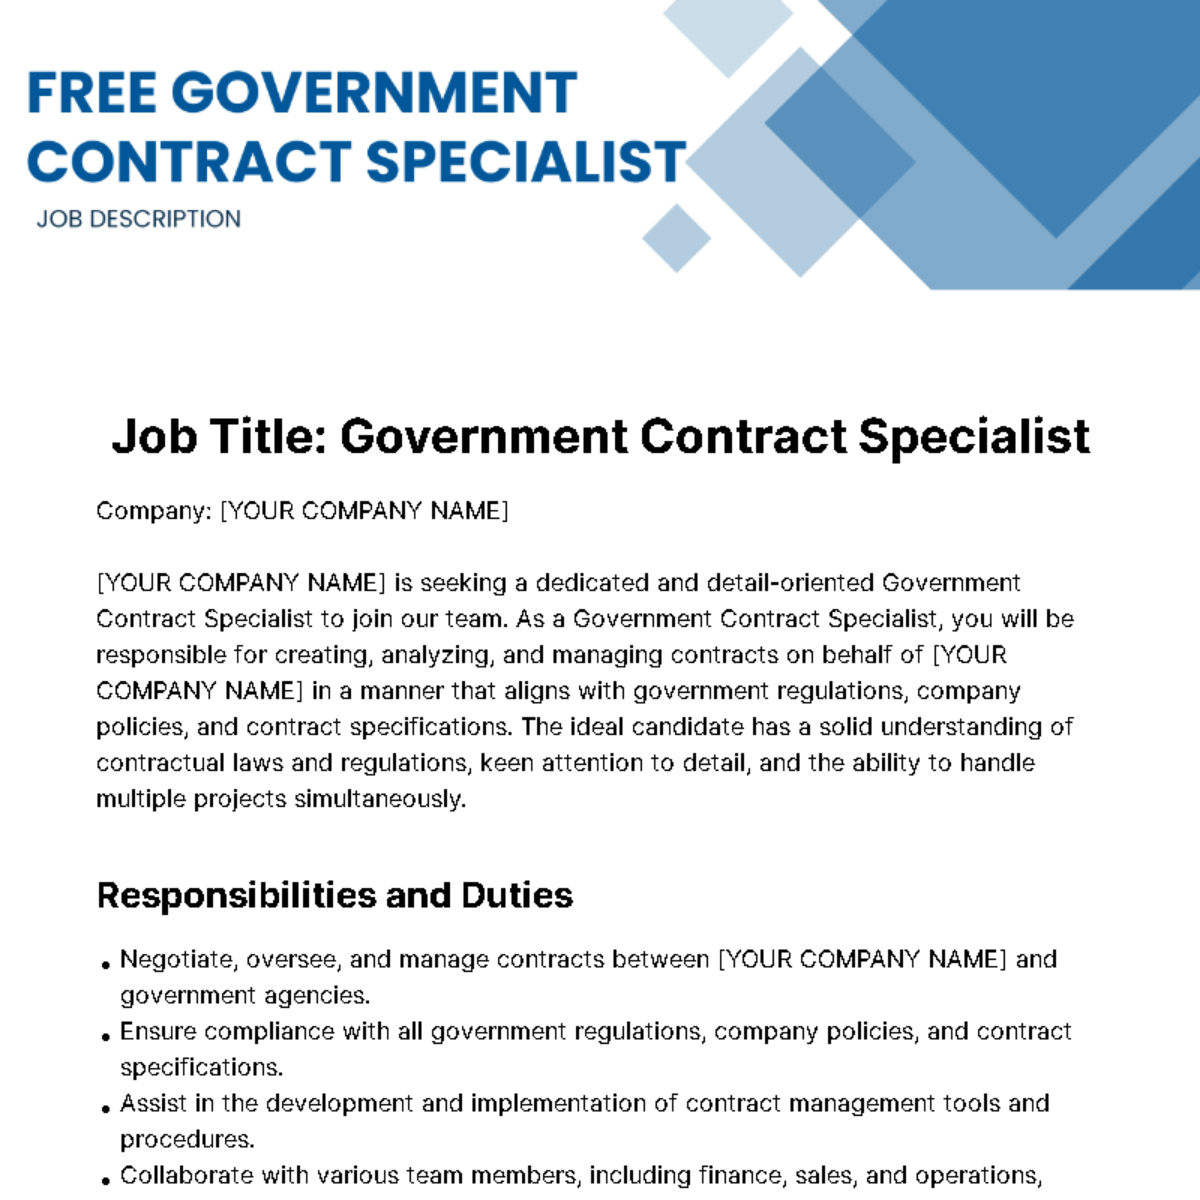 Free Government Contract Specialist Job Description Template